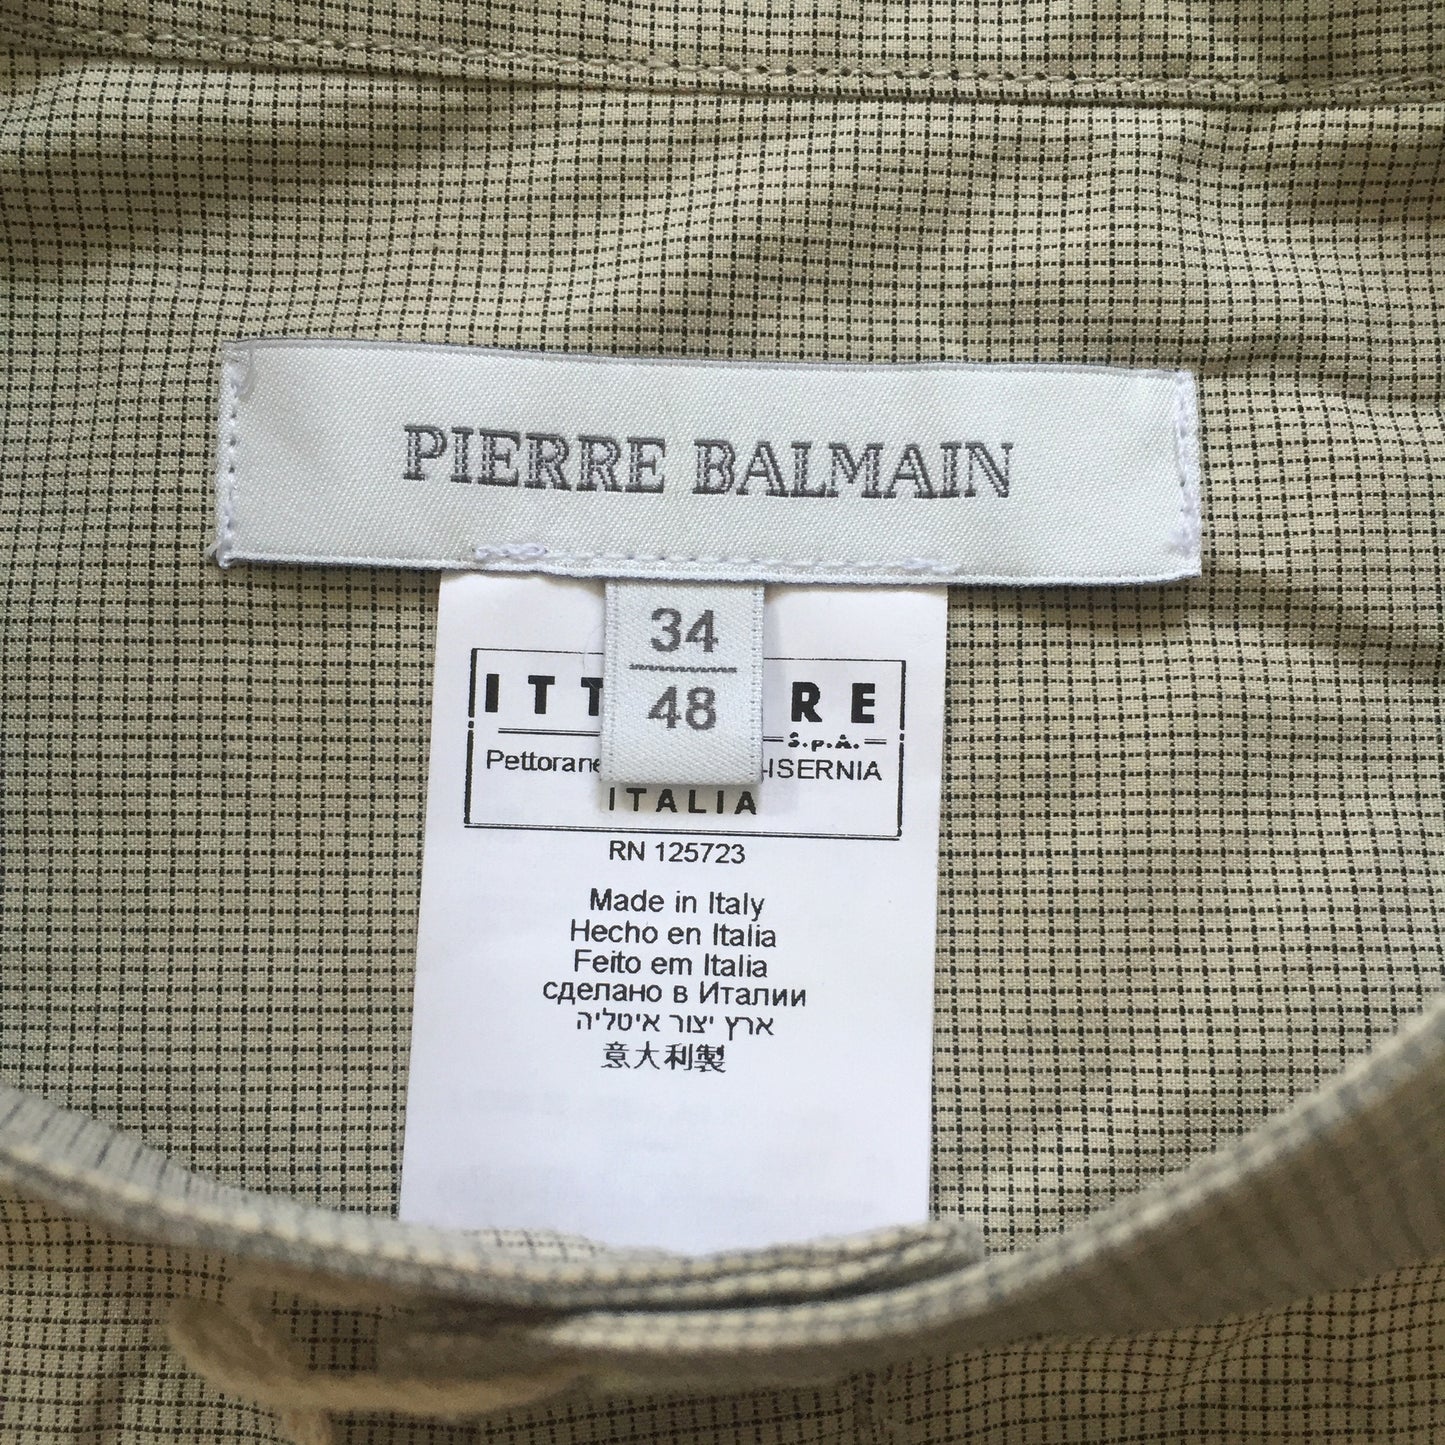 Pierre Balmain - Tan Check Band Collar Shirt